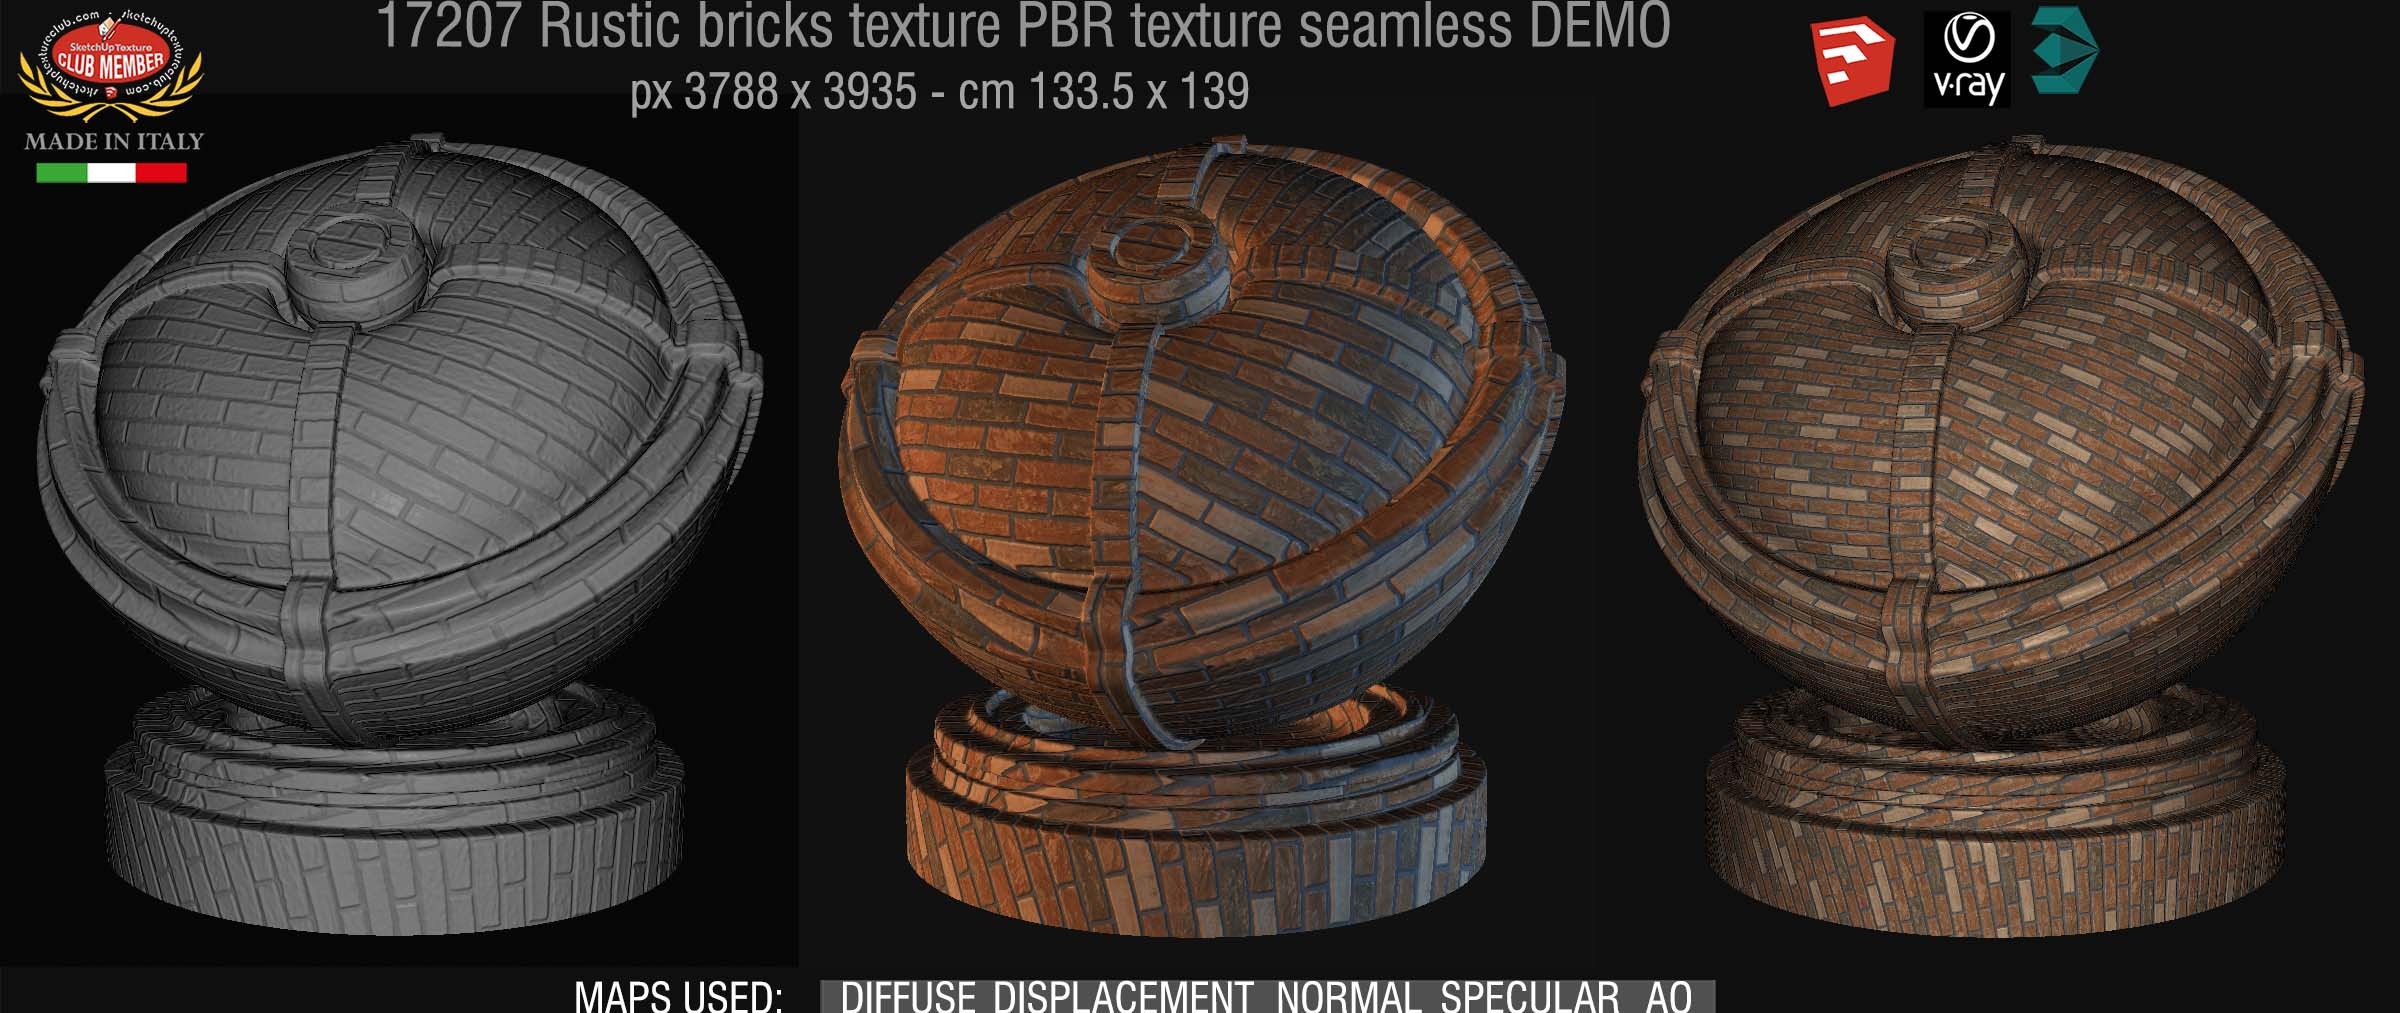 17207 Rustic bricks PBR texture seamless DEMO